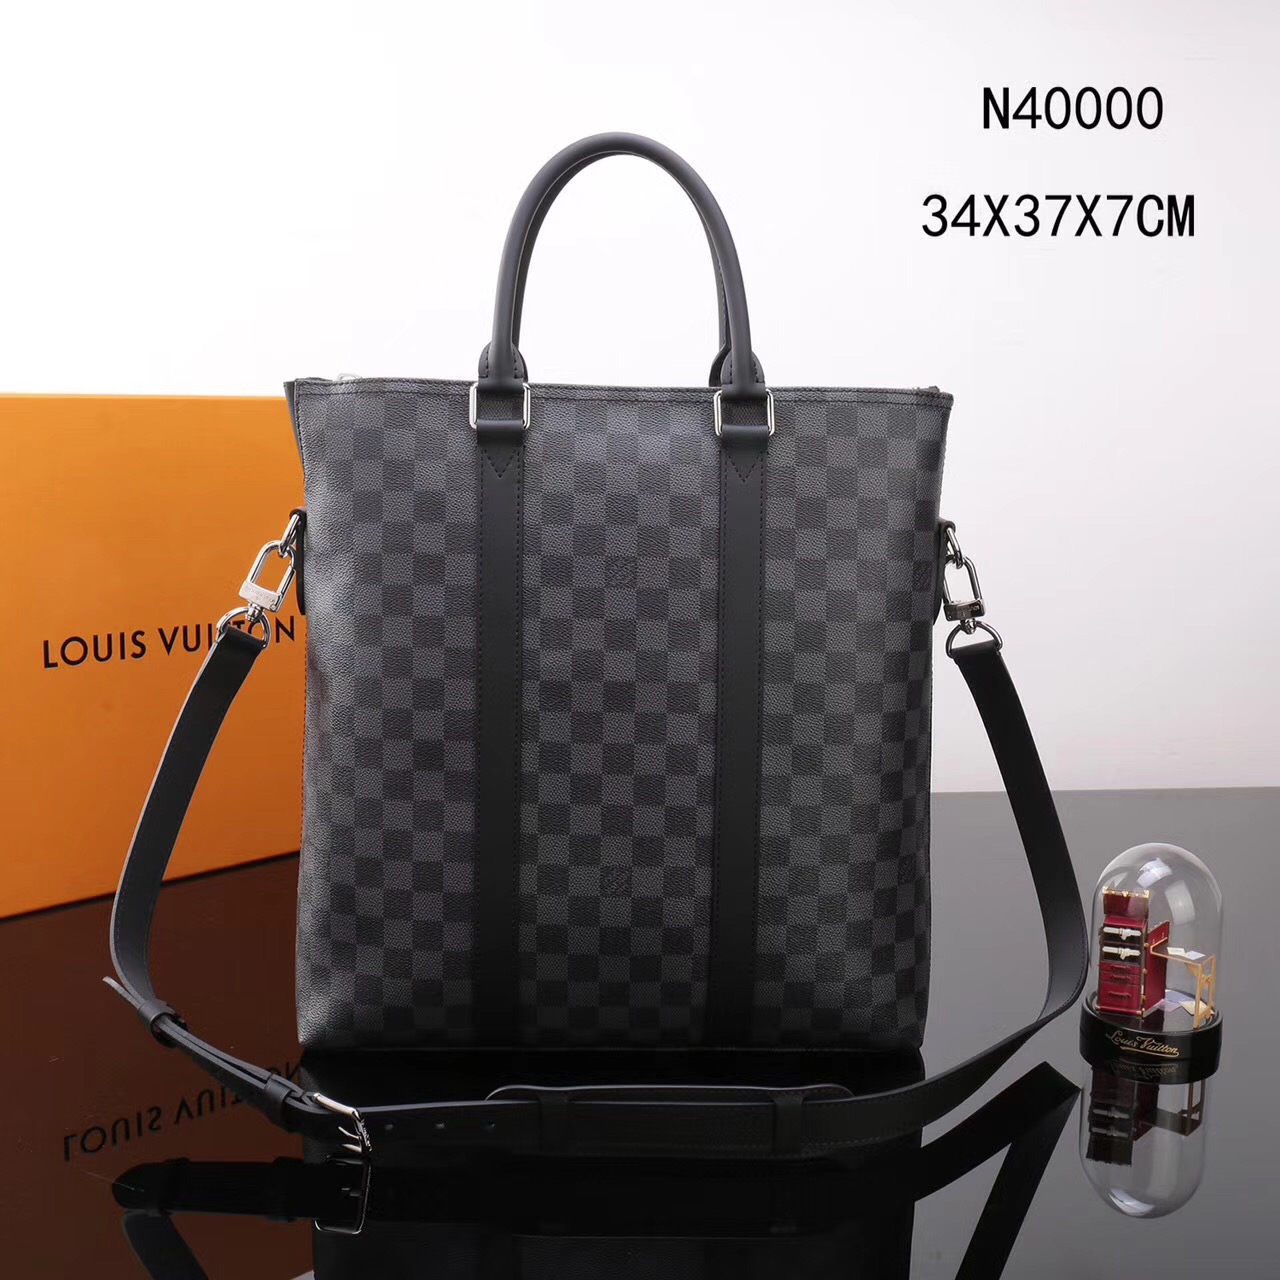 LV Louis Vuitton Explorer Tote Eclipse bags N40000 Monogram Handbags